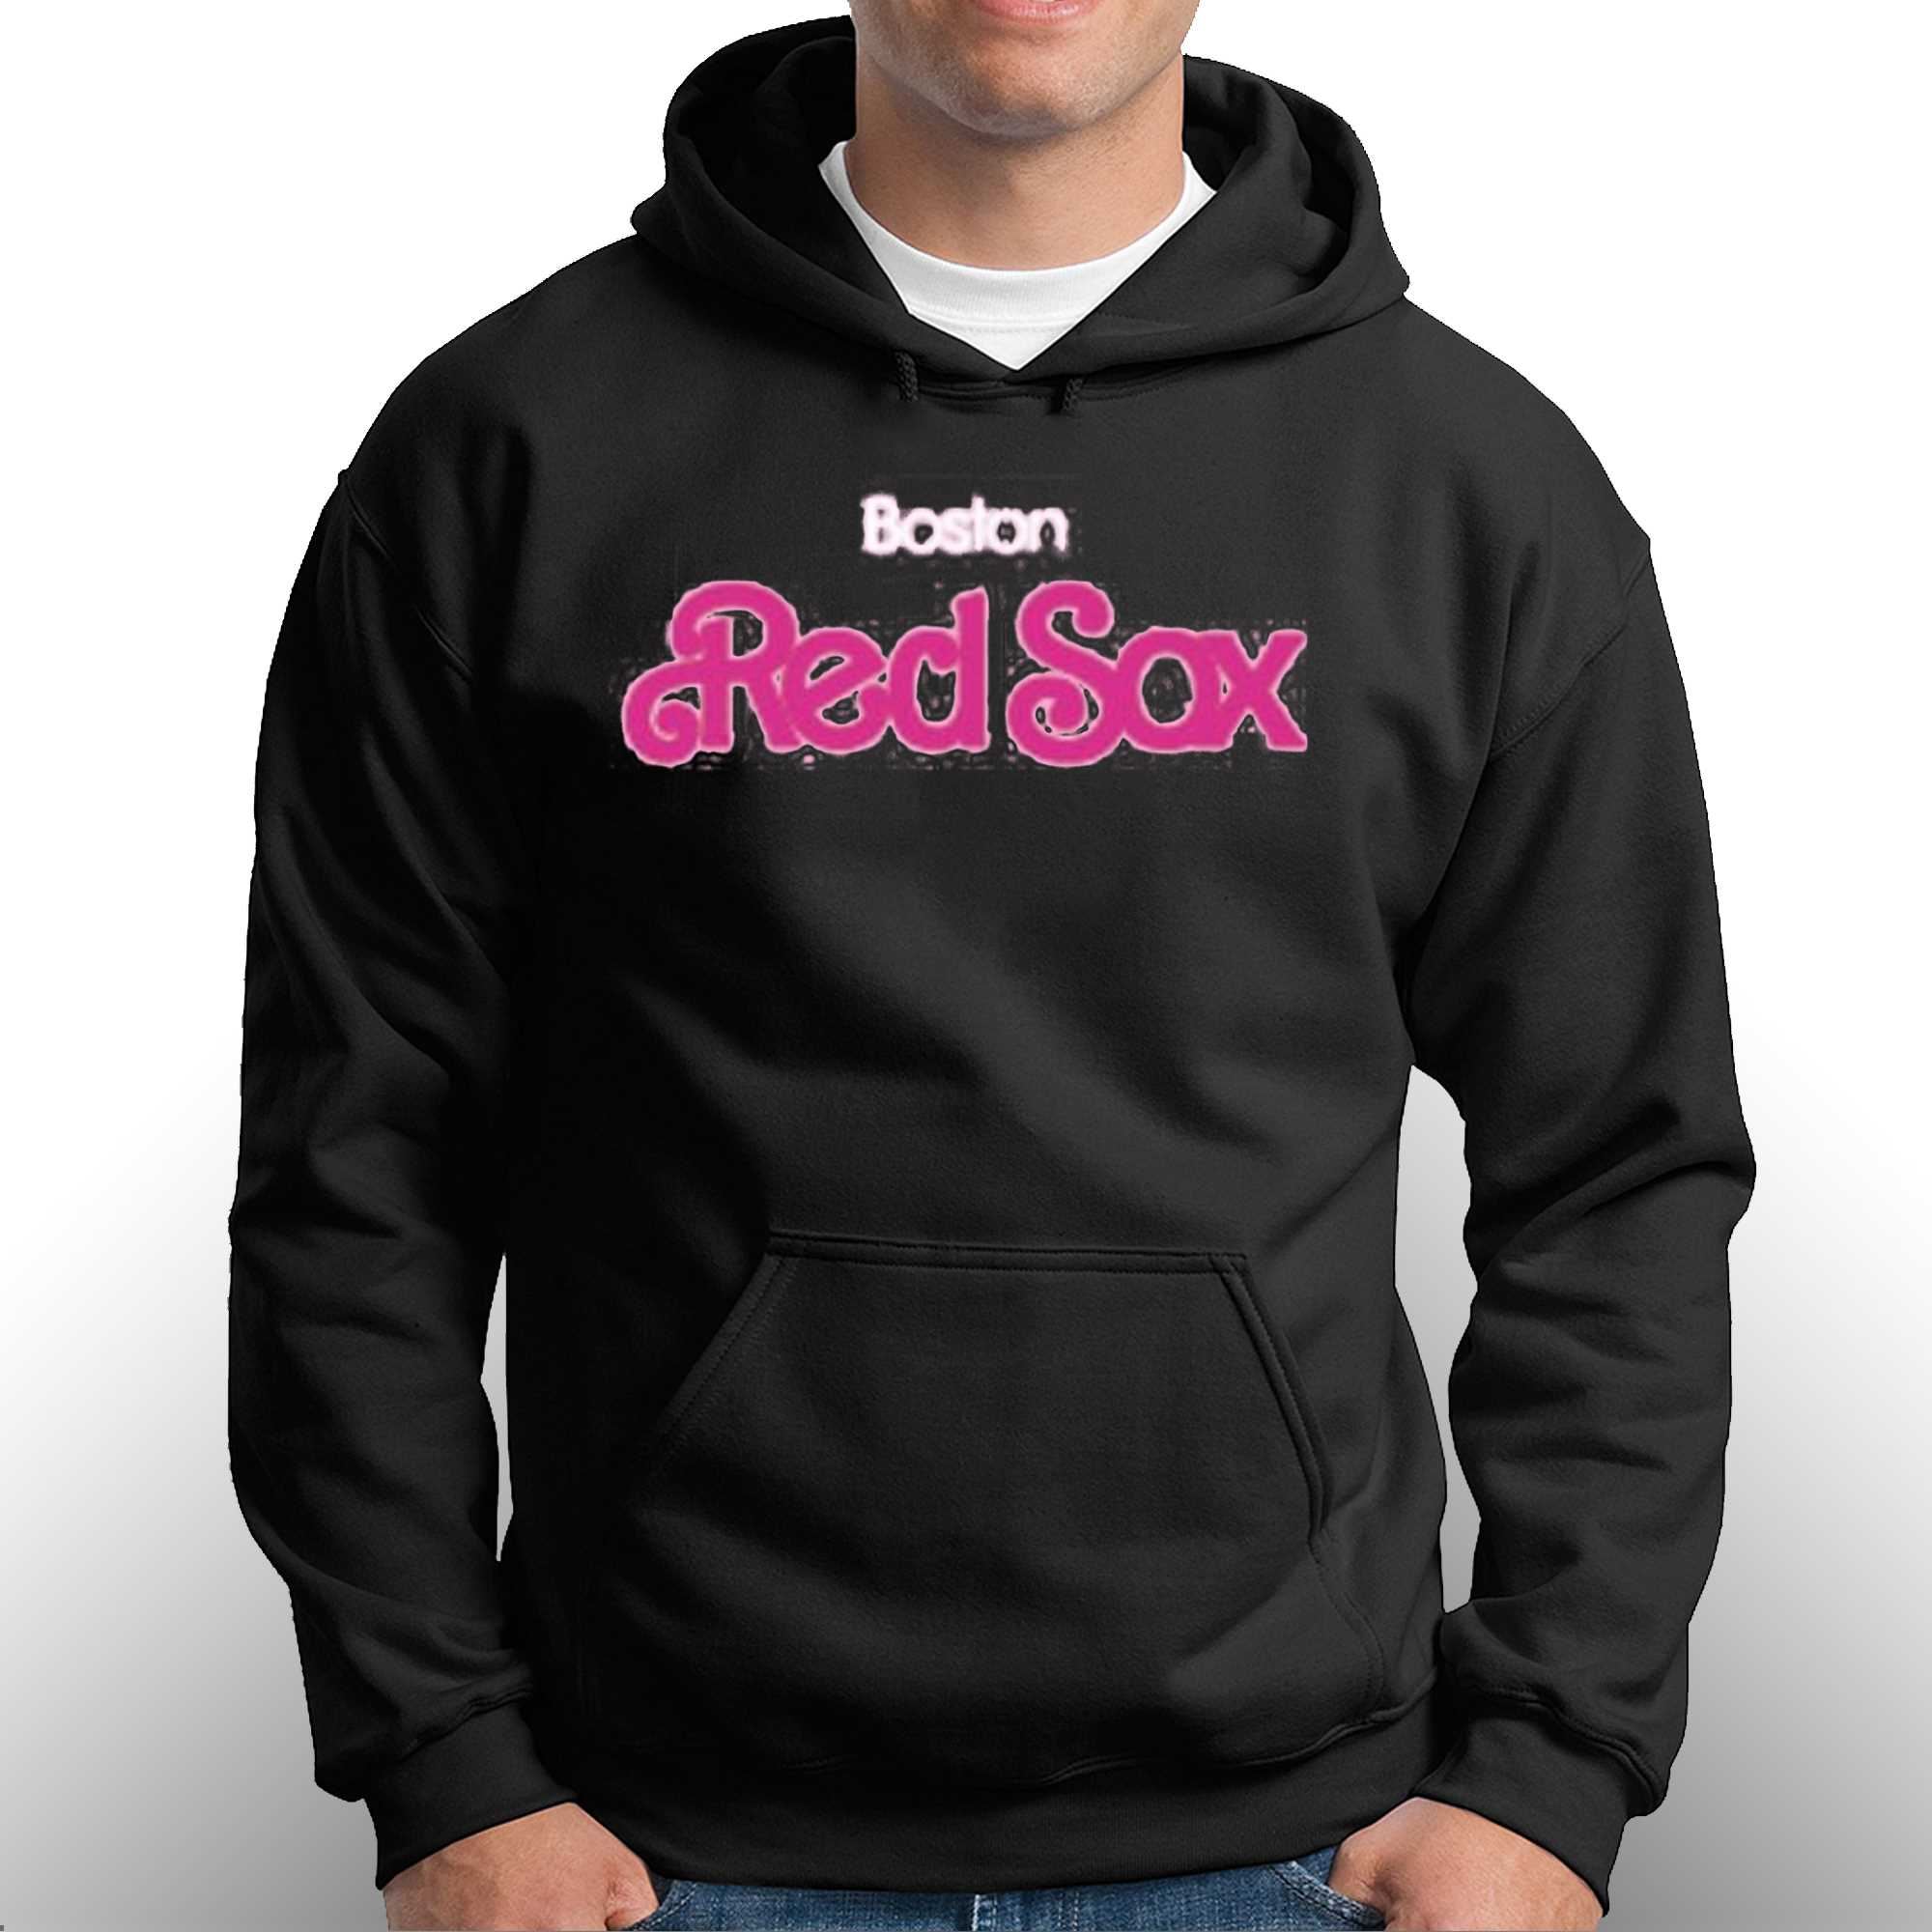 Barbie X Red Sox T-shirt - Shibtee Clothing